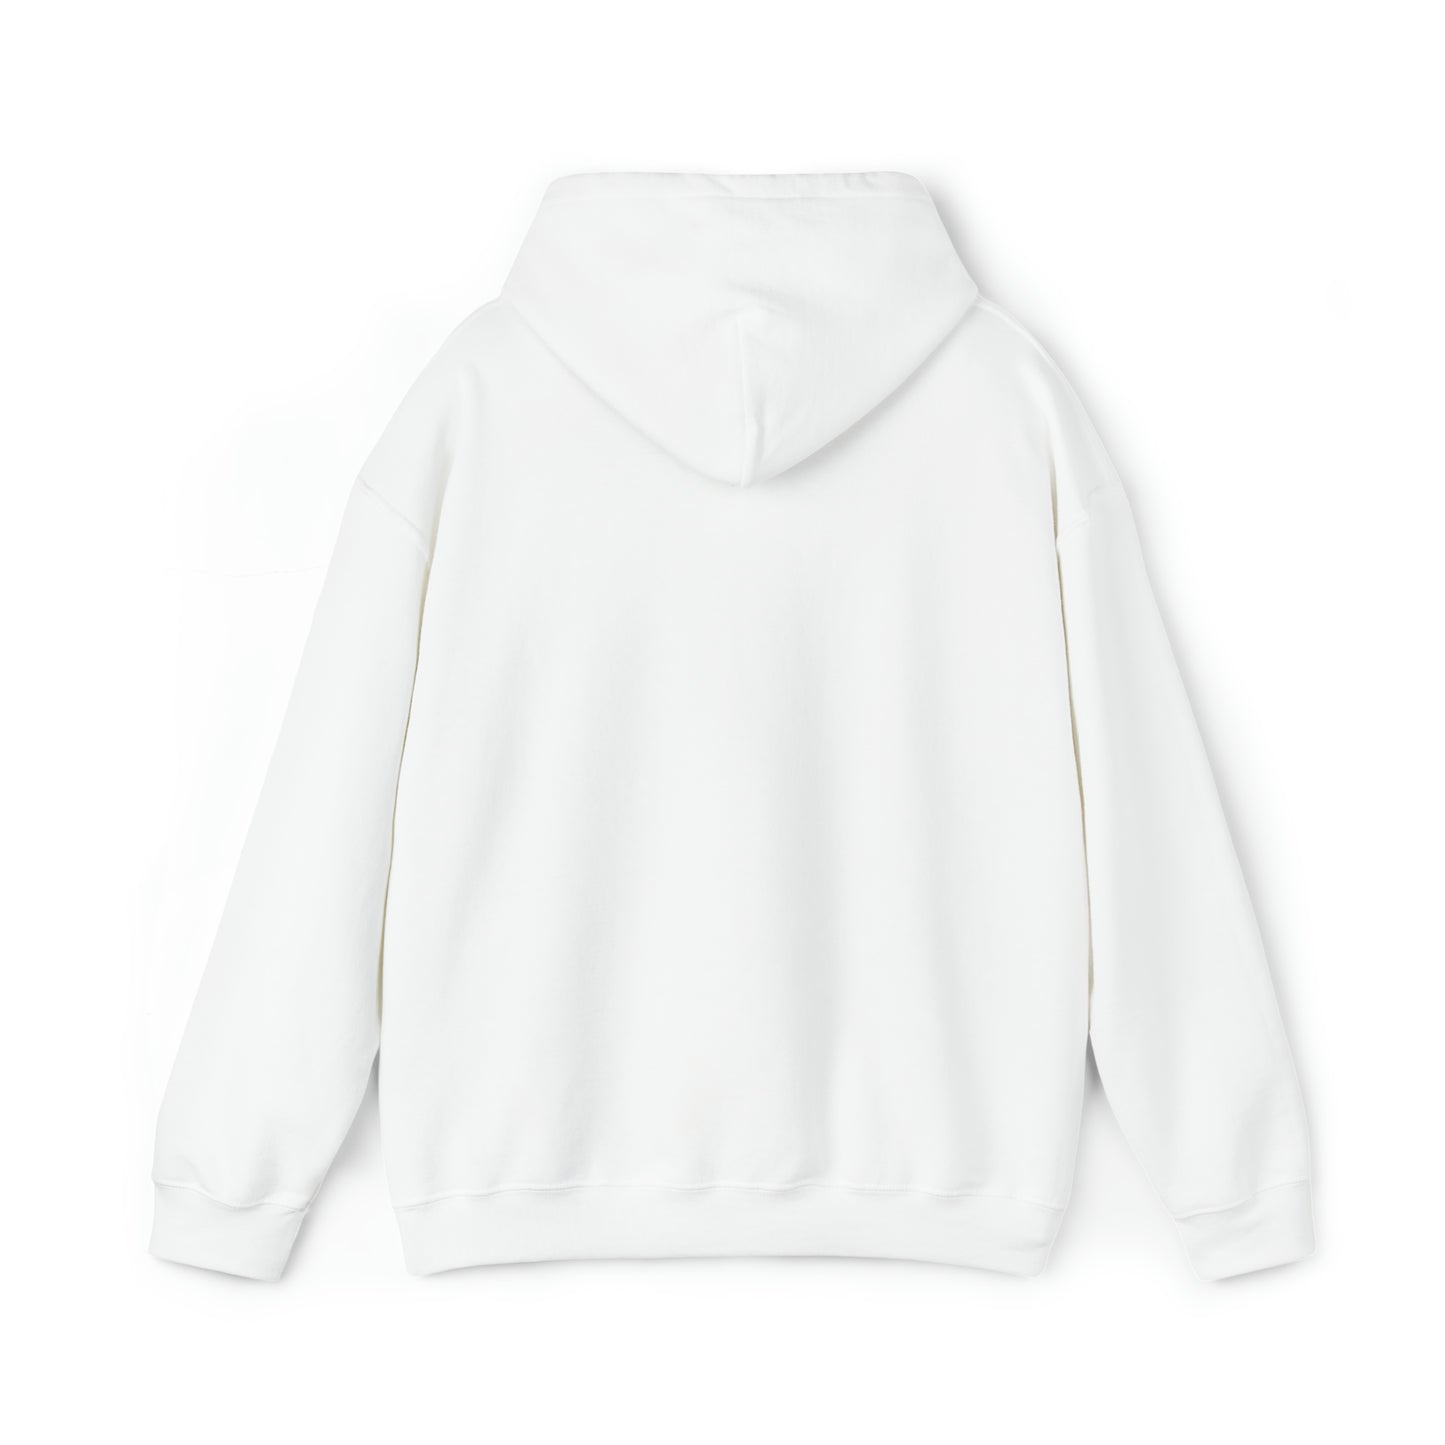 Unisex Heavy Blend™ Hooded Sweatshirt Video Streaming Inspired Logo